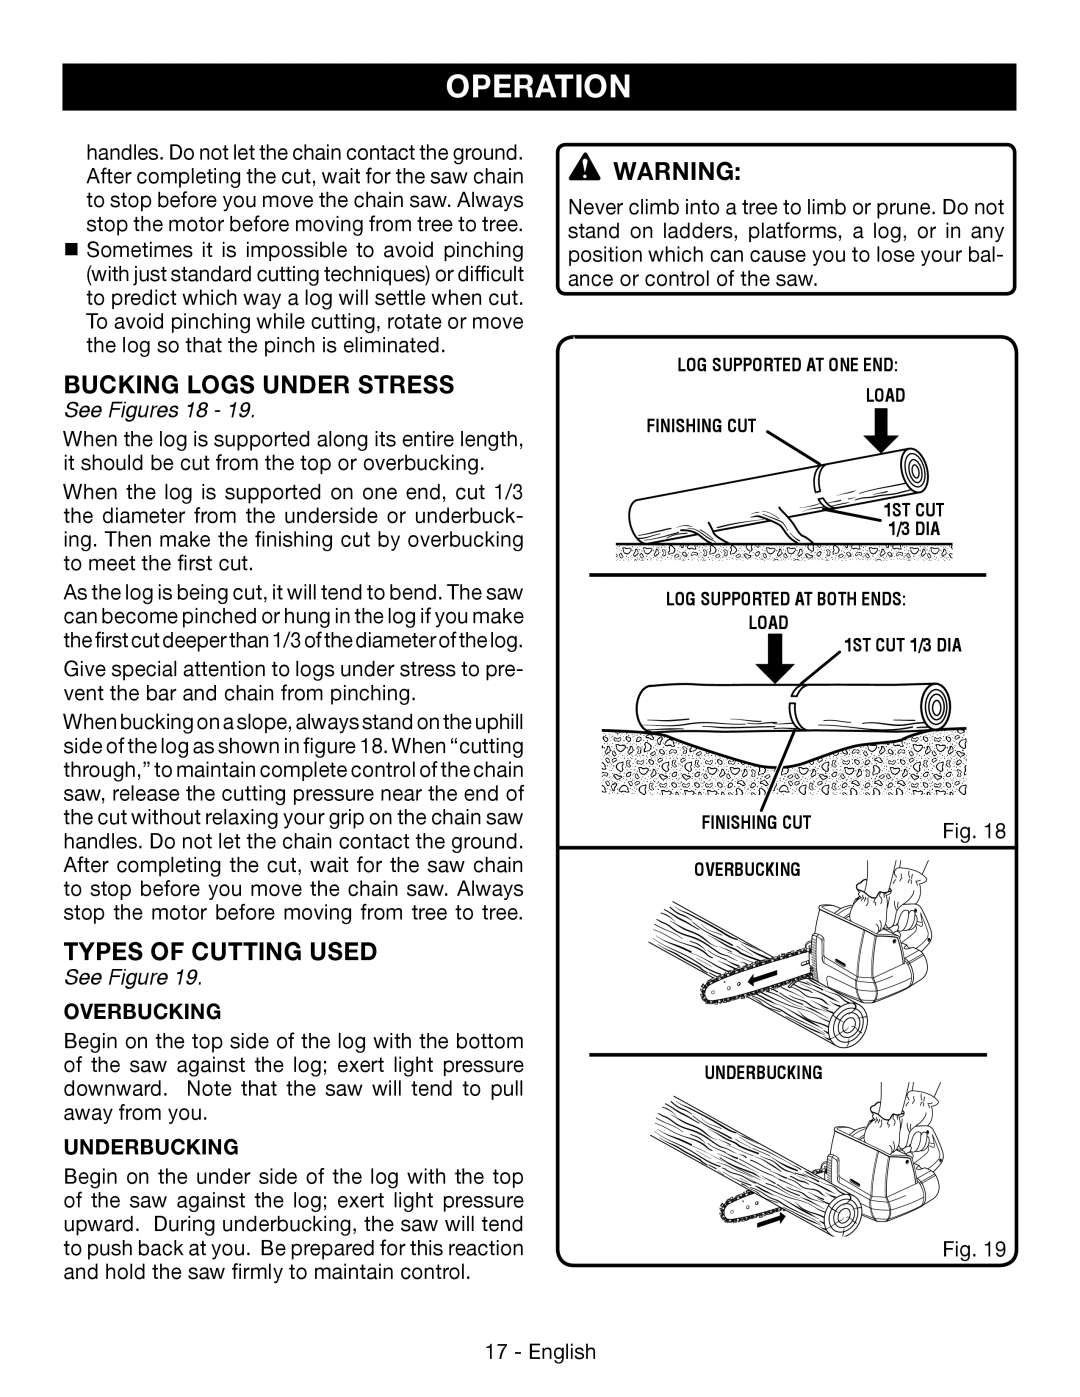 Ryobi P545 Bucking Logs Under Stress, Types Of Cutting Used, See Figures 18, Overbucking, Underbucking, Operation 